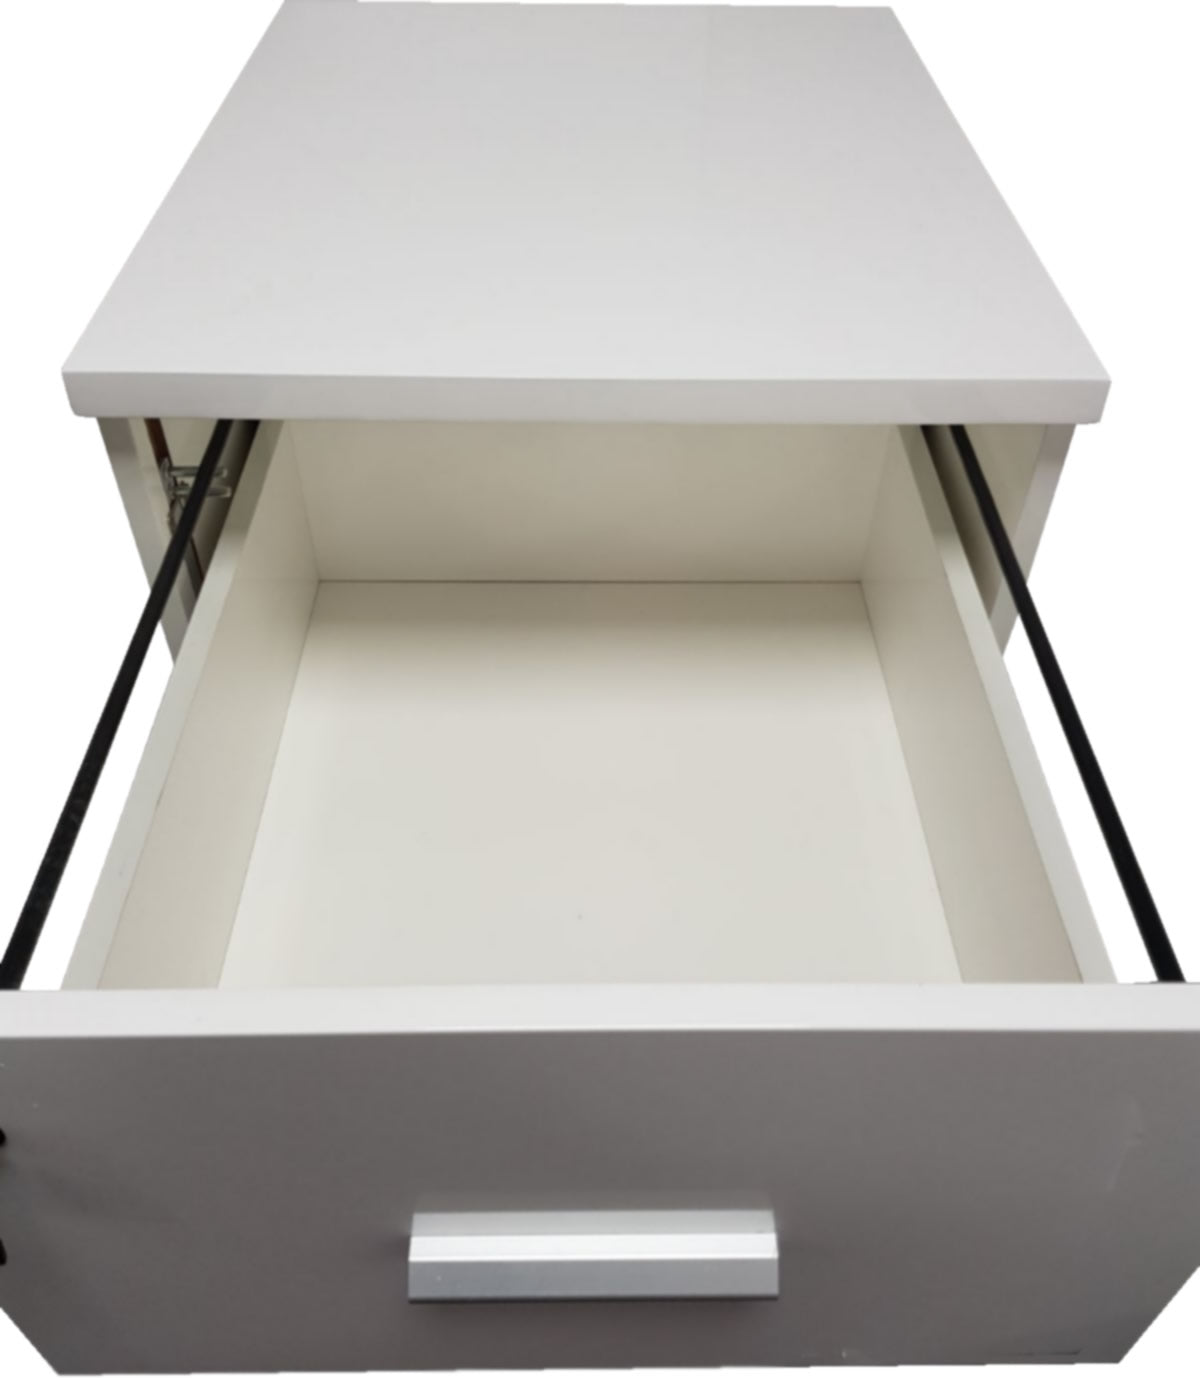 White Gloss Four Drawer Filing Cabinet - AB84-4DR